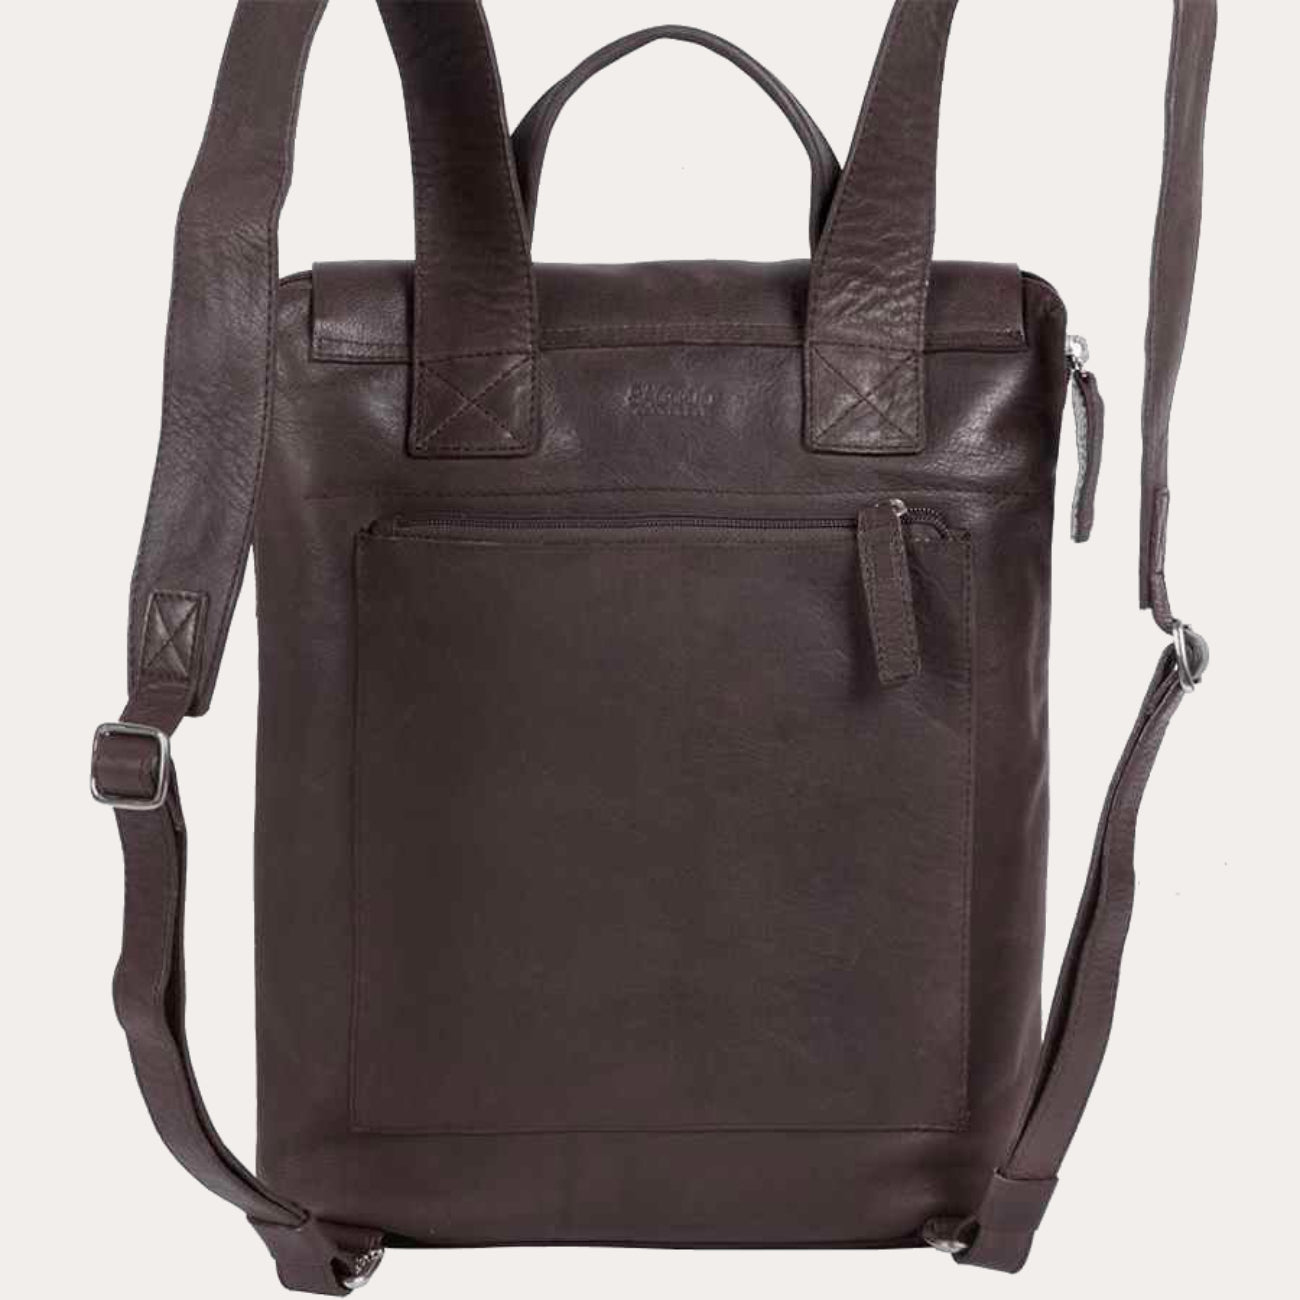 Saccoo Choco Leather Backpack-Large Size